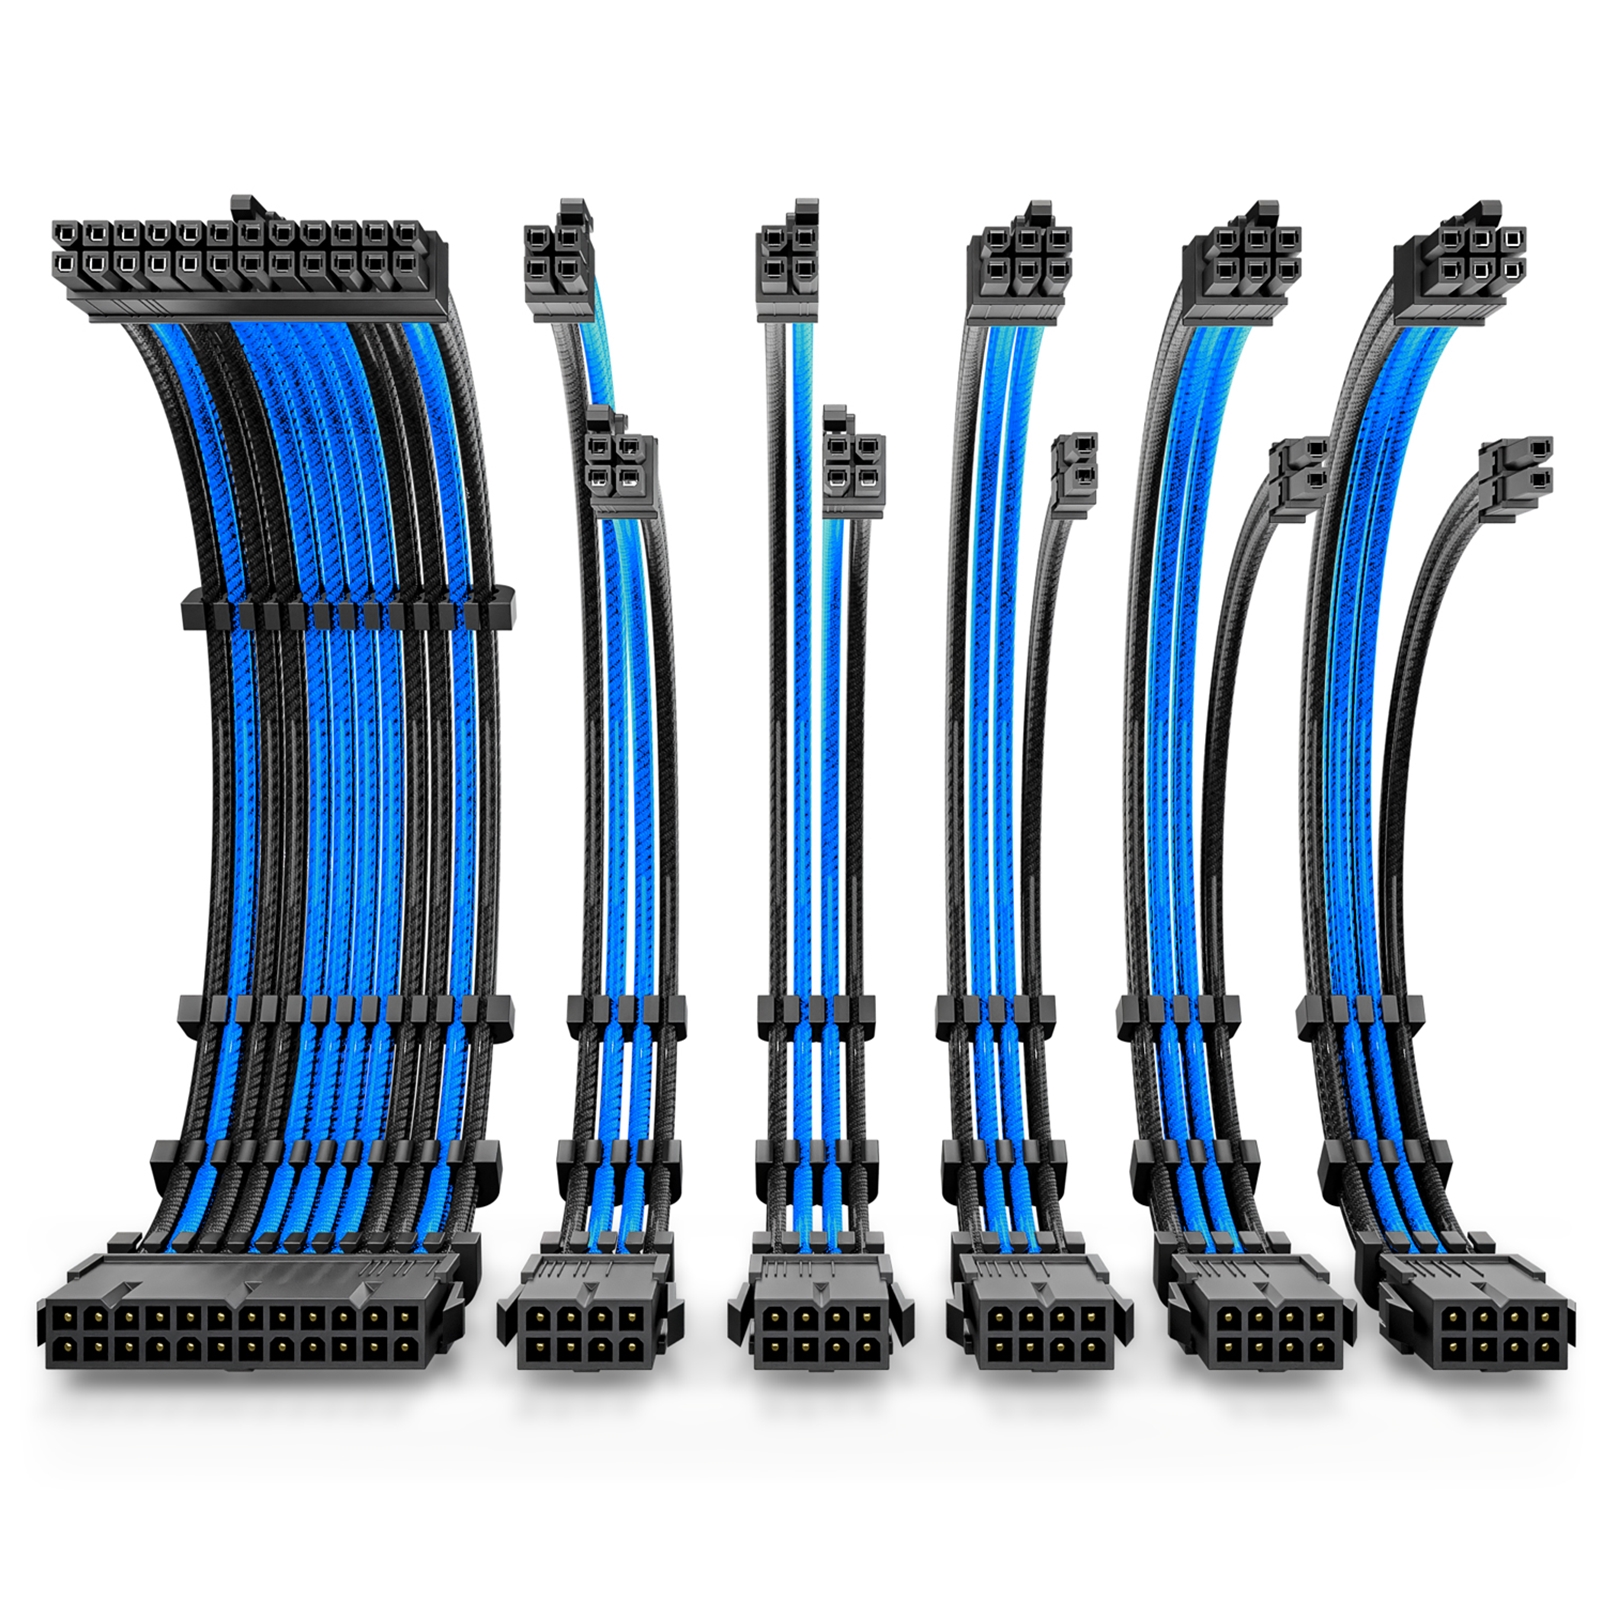 0-761345-77716-2 ANTEC Black/Blue PSU Extension Cable Kit - 6 Pack (1x 24 Pin, 2x 4+4 Pin, 3x 6+2 Pin)